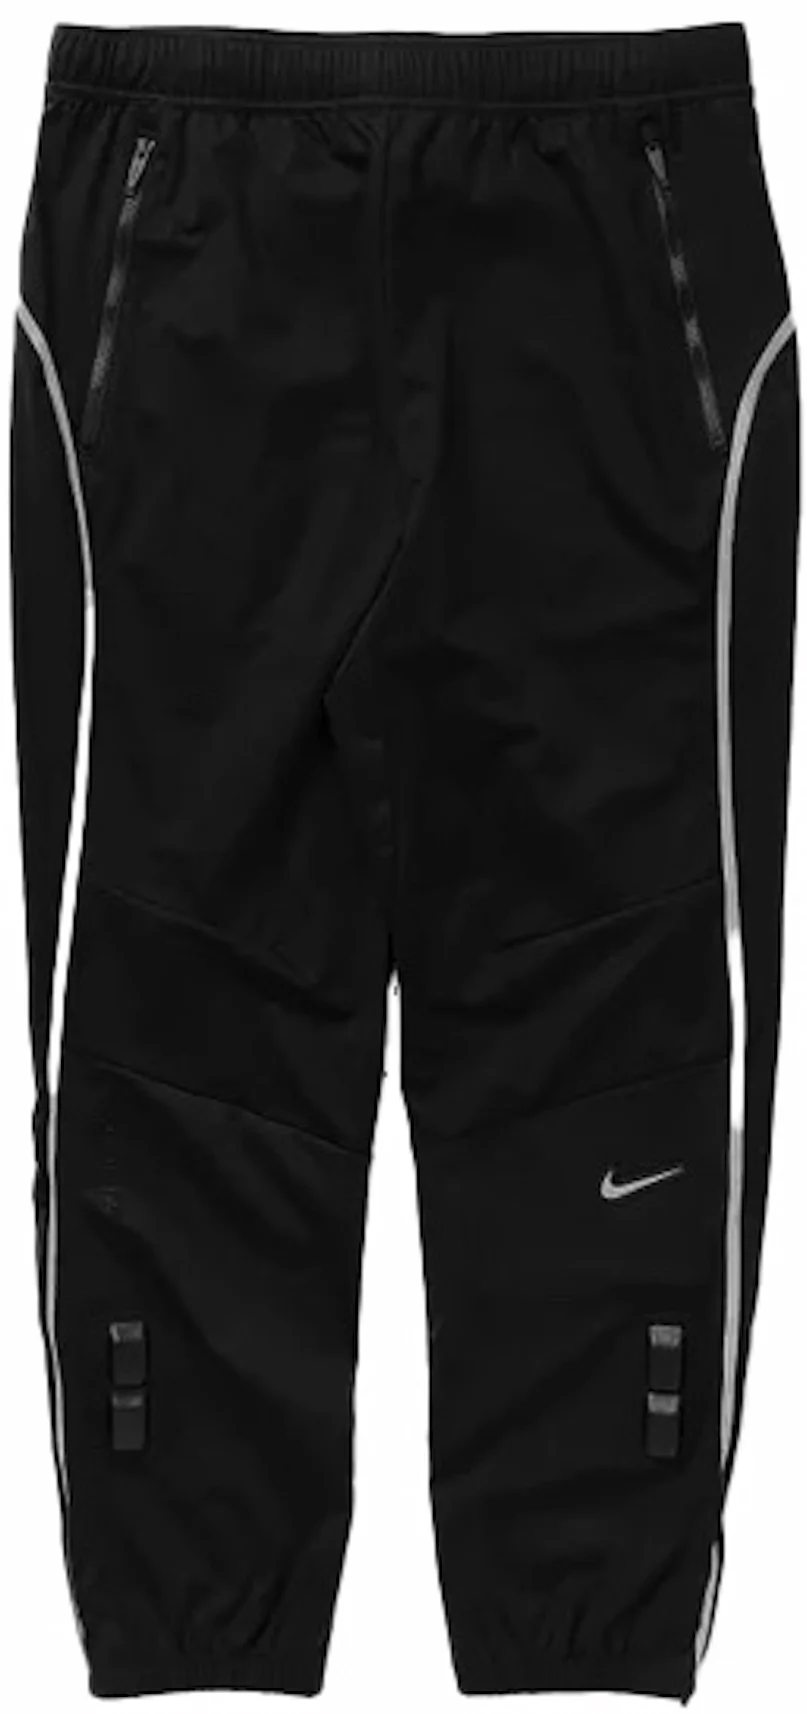 Nike Sport Pants and Warm-ups